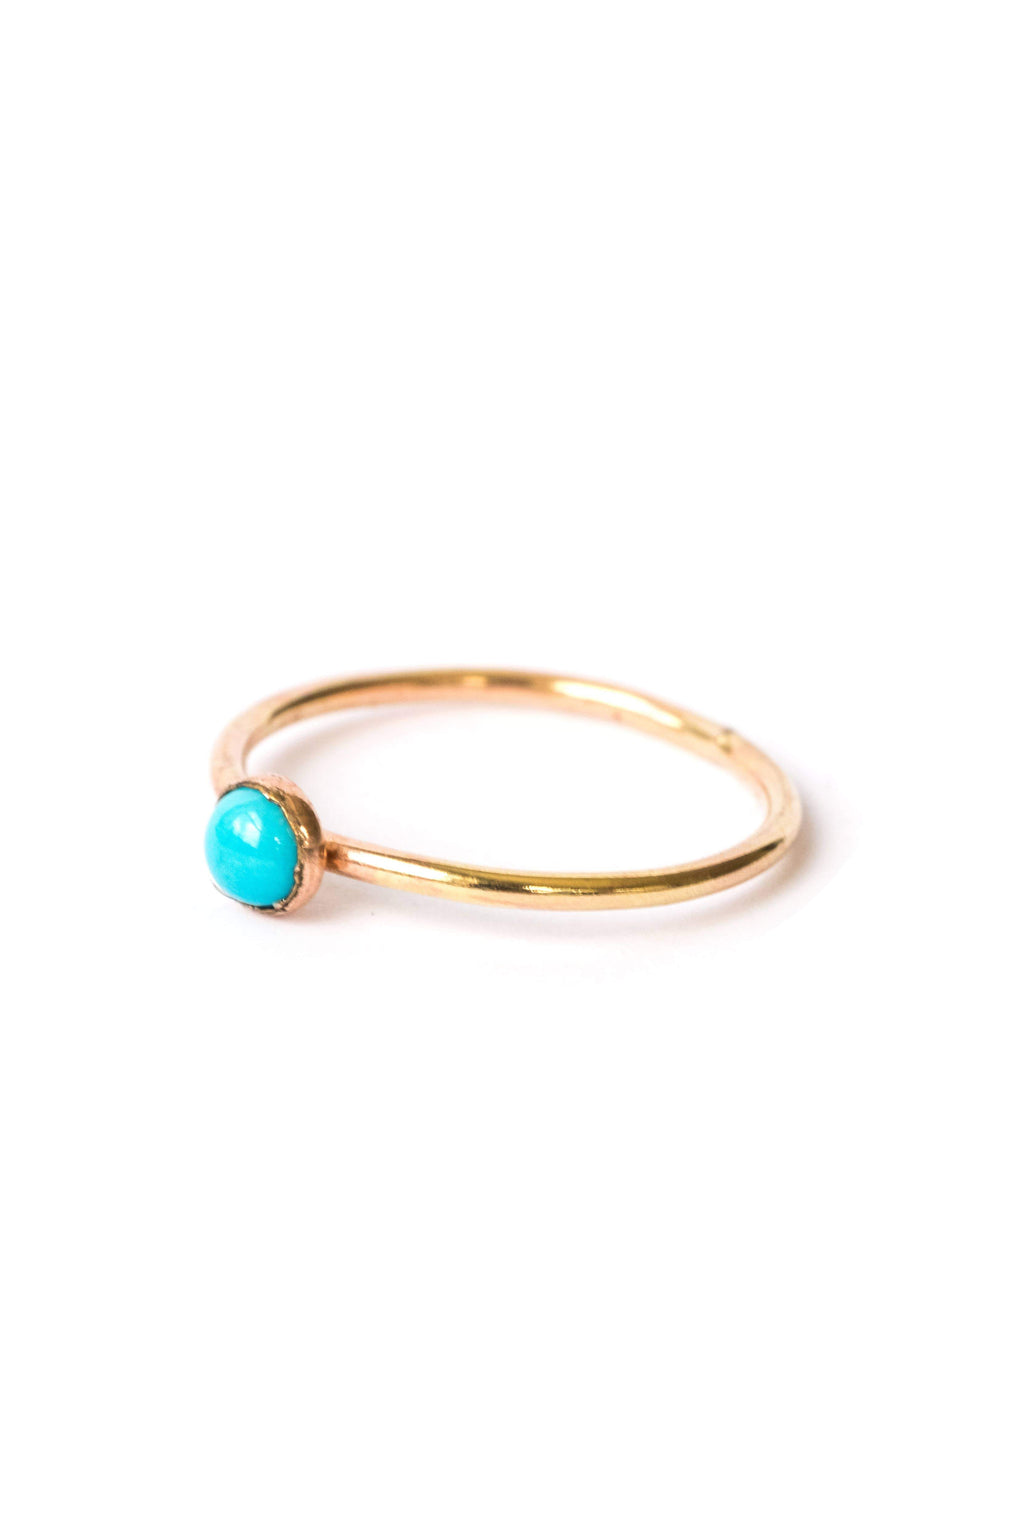 Adorn512 - Single Stone Ring